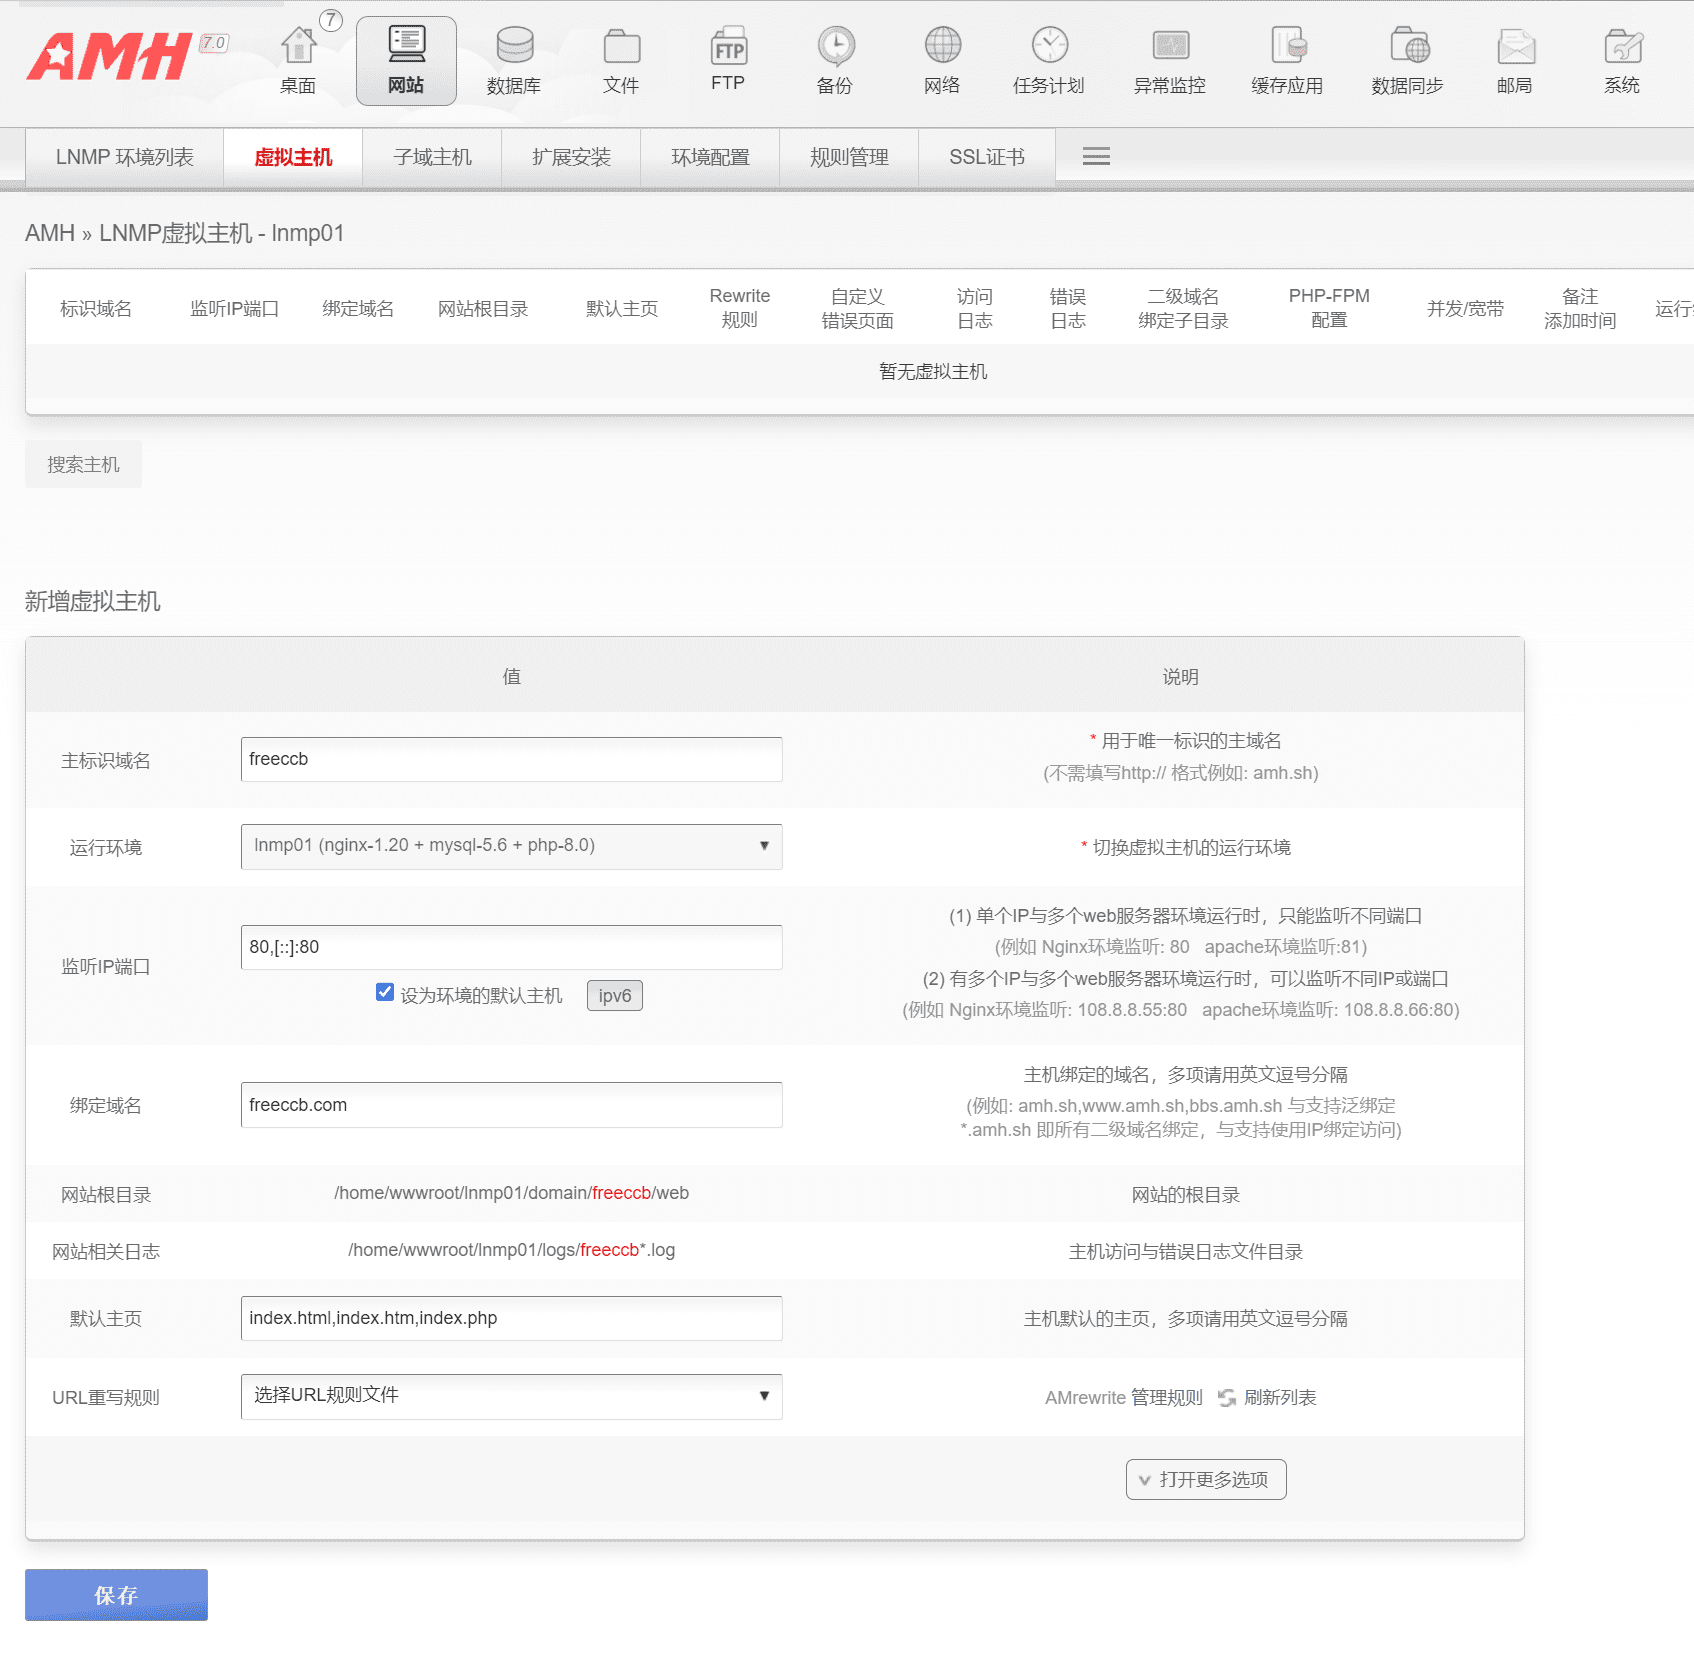 AMH-WP 개인 블로그 사이트 구축: AMH 호스팅 패널을 사용하여 WordPress-1 설치